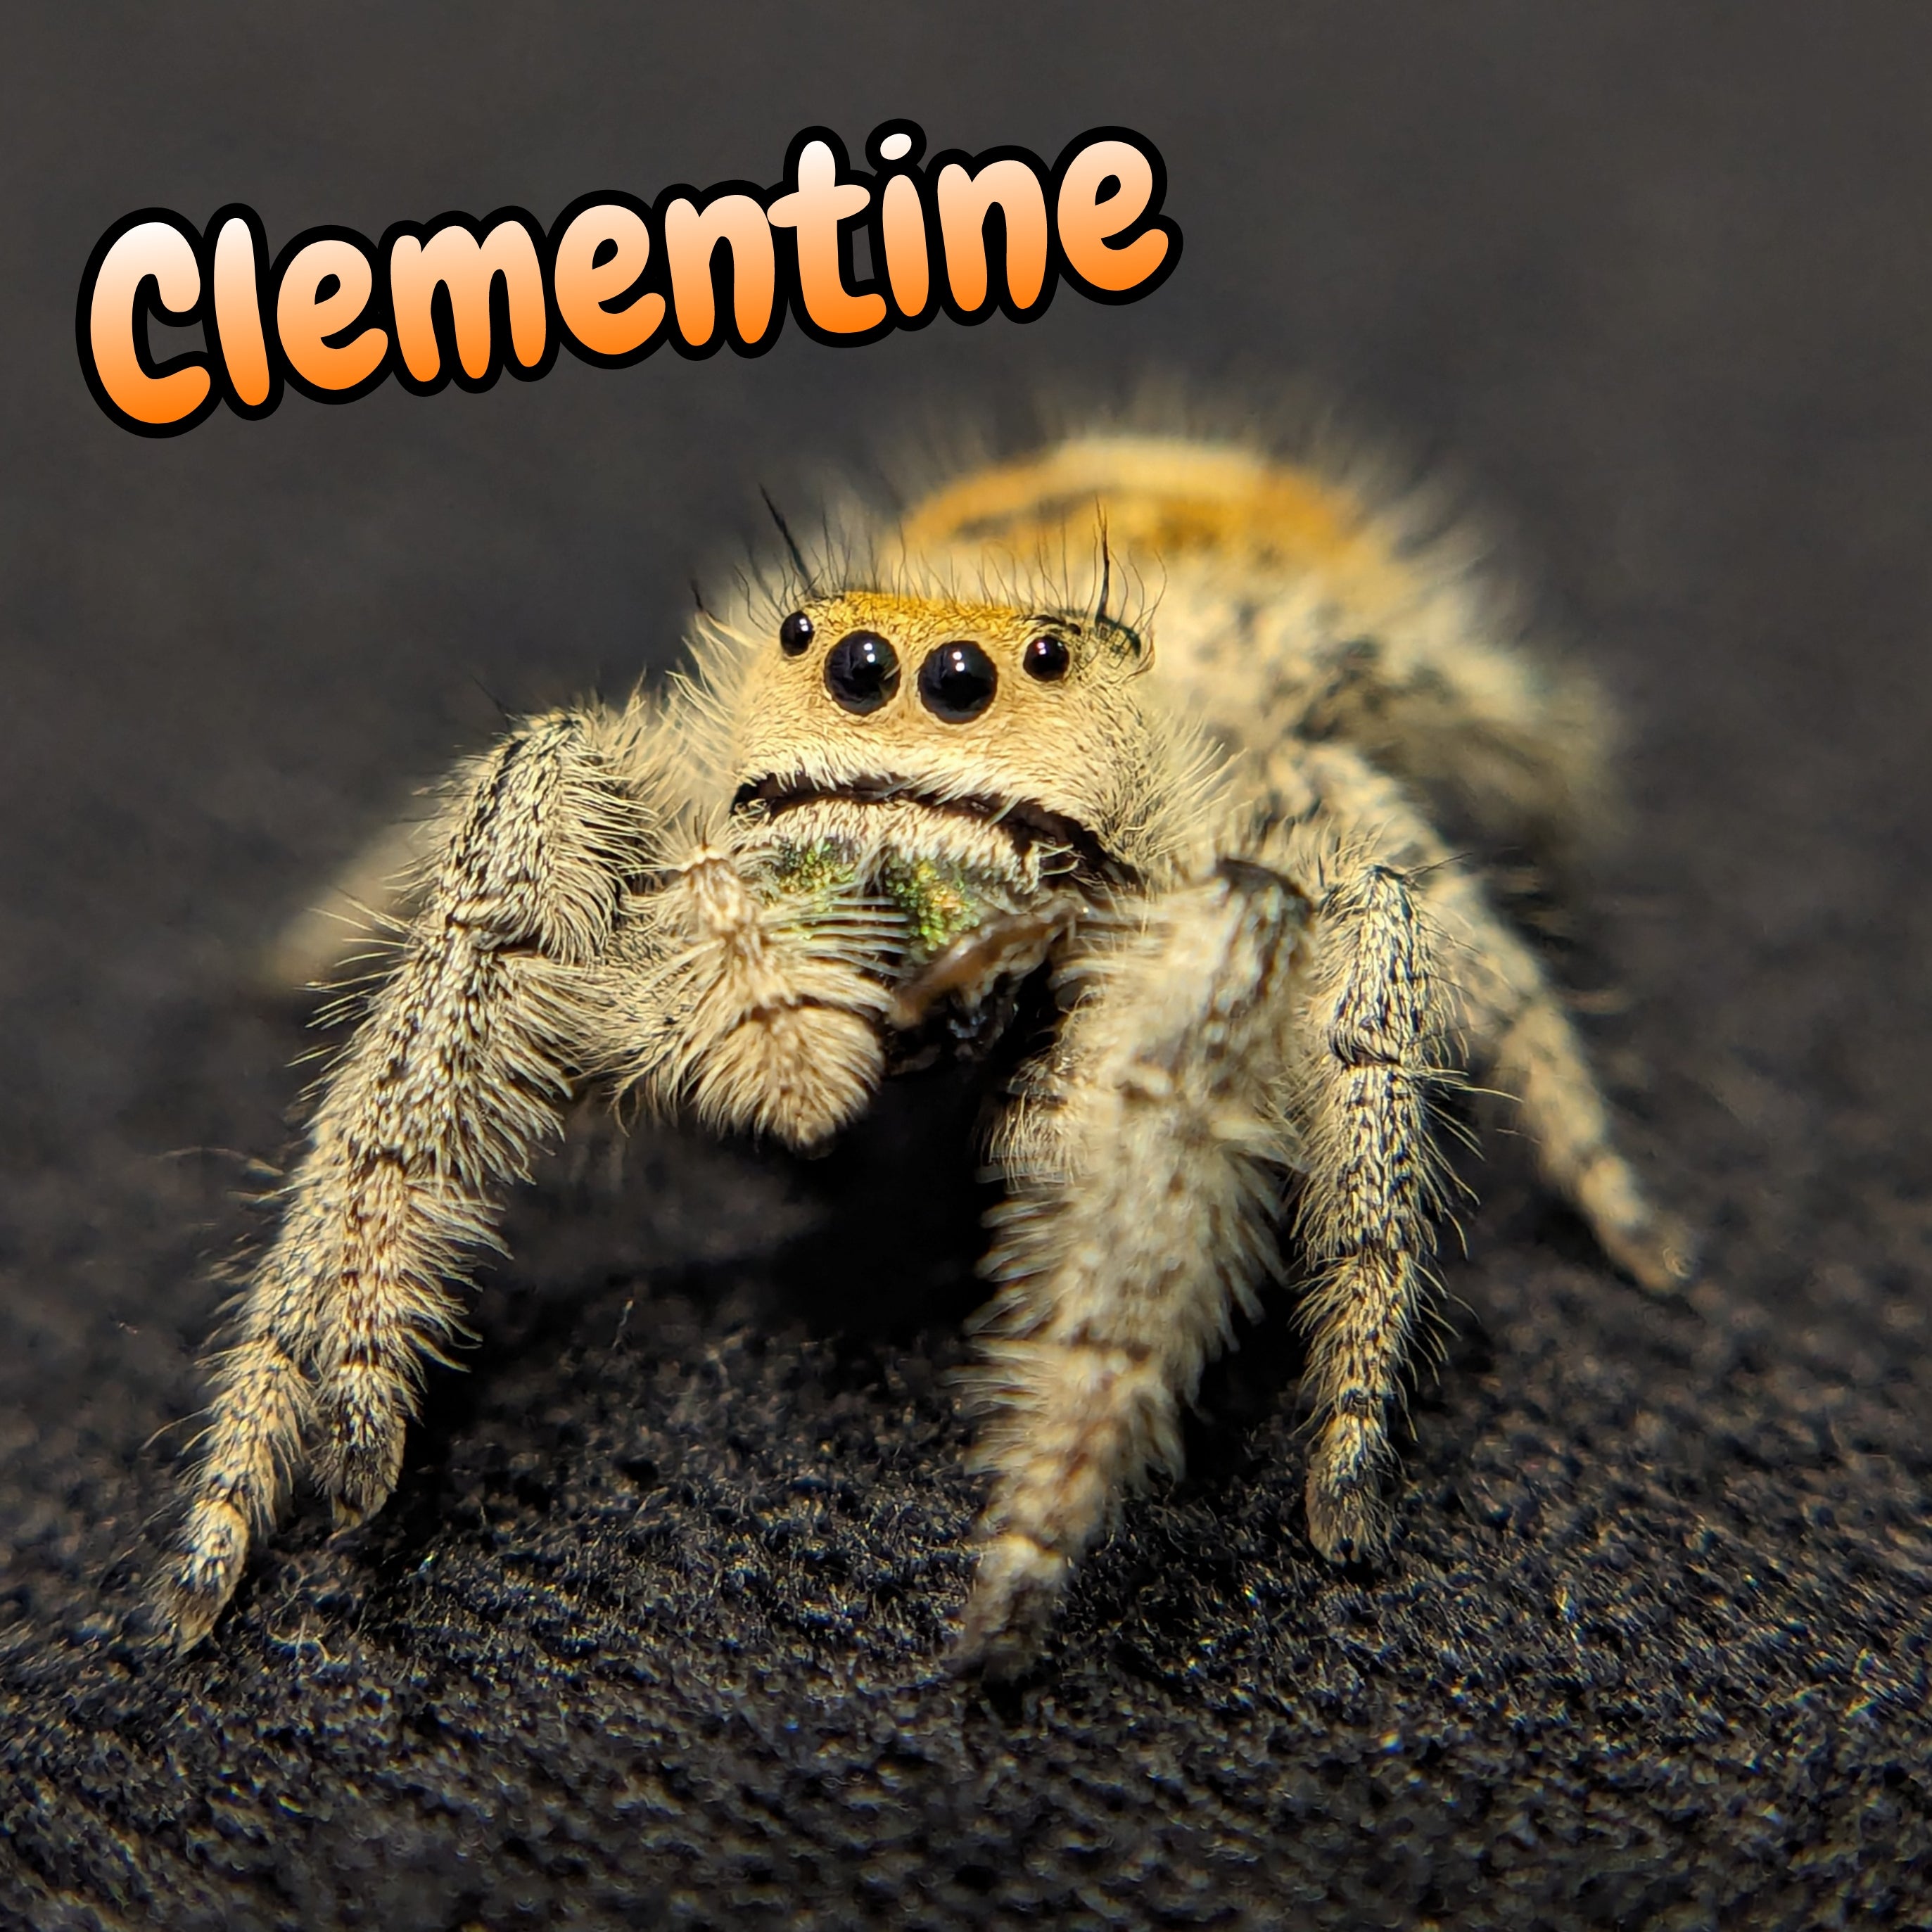 Regal Jumping Spider "Clementine"